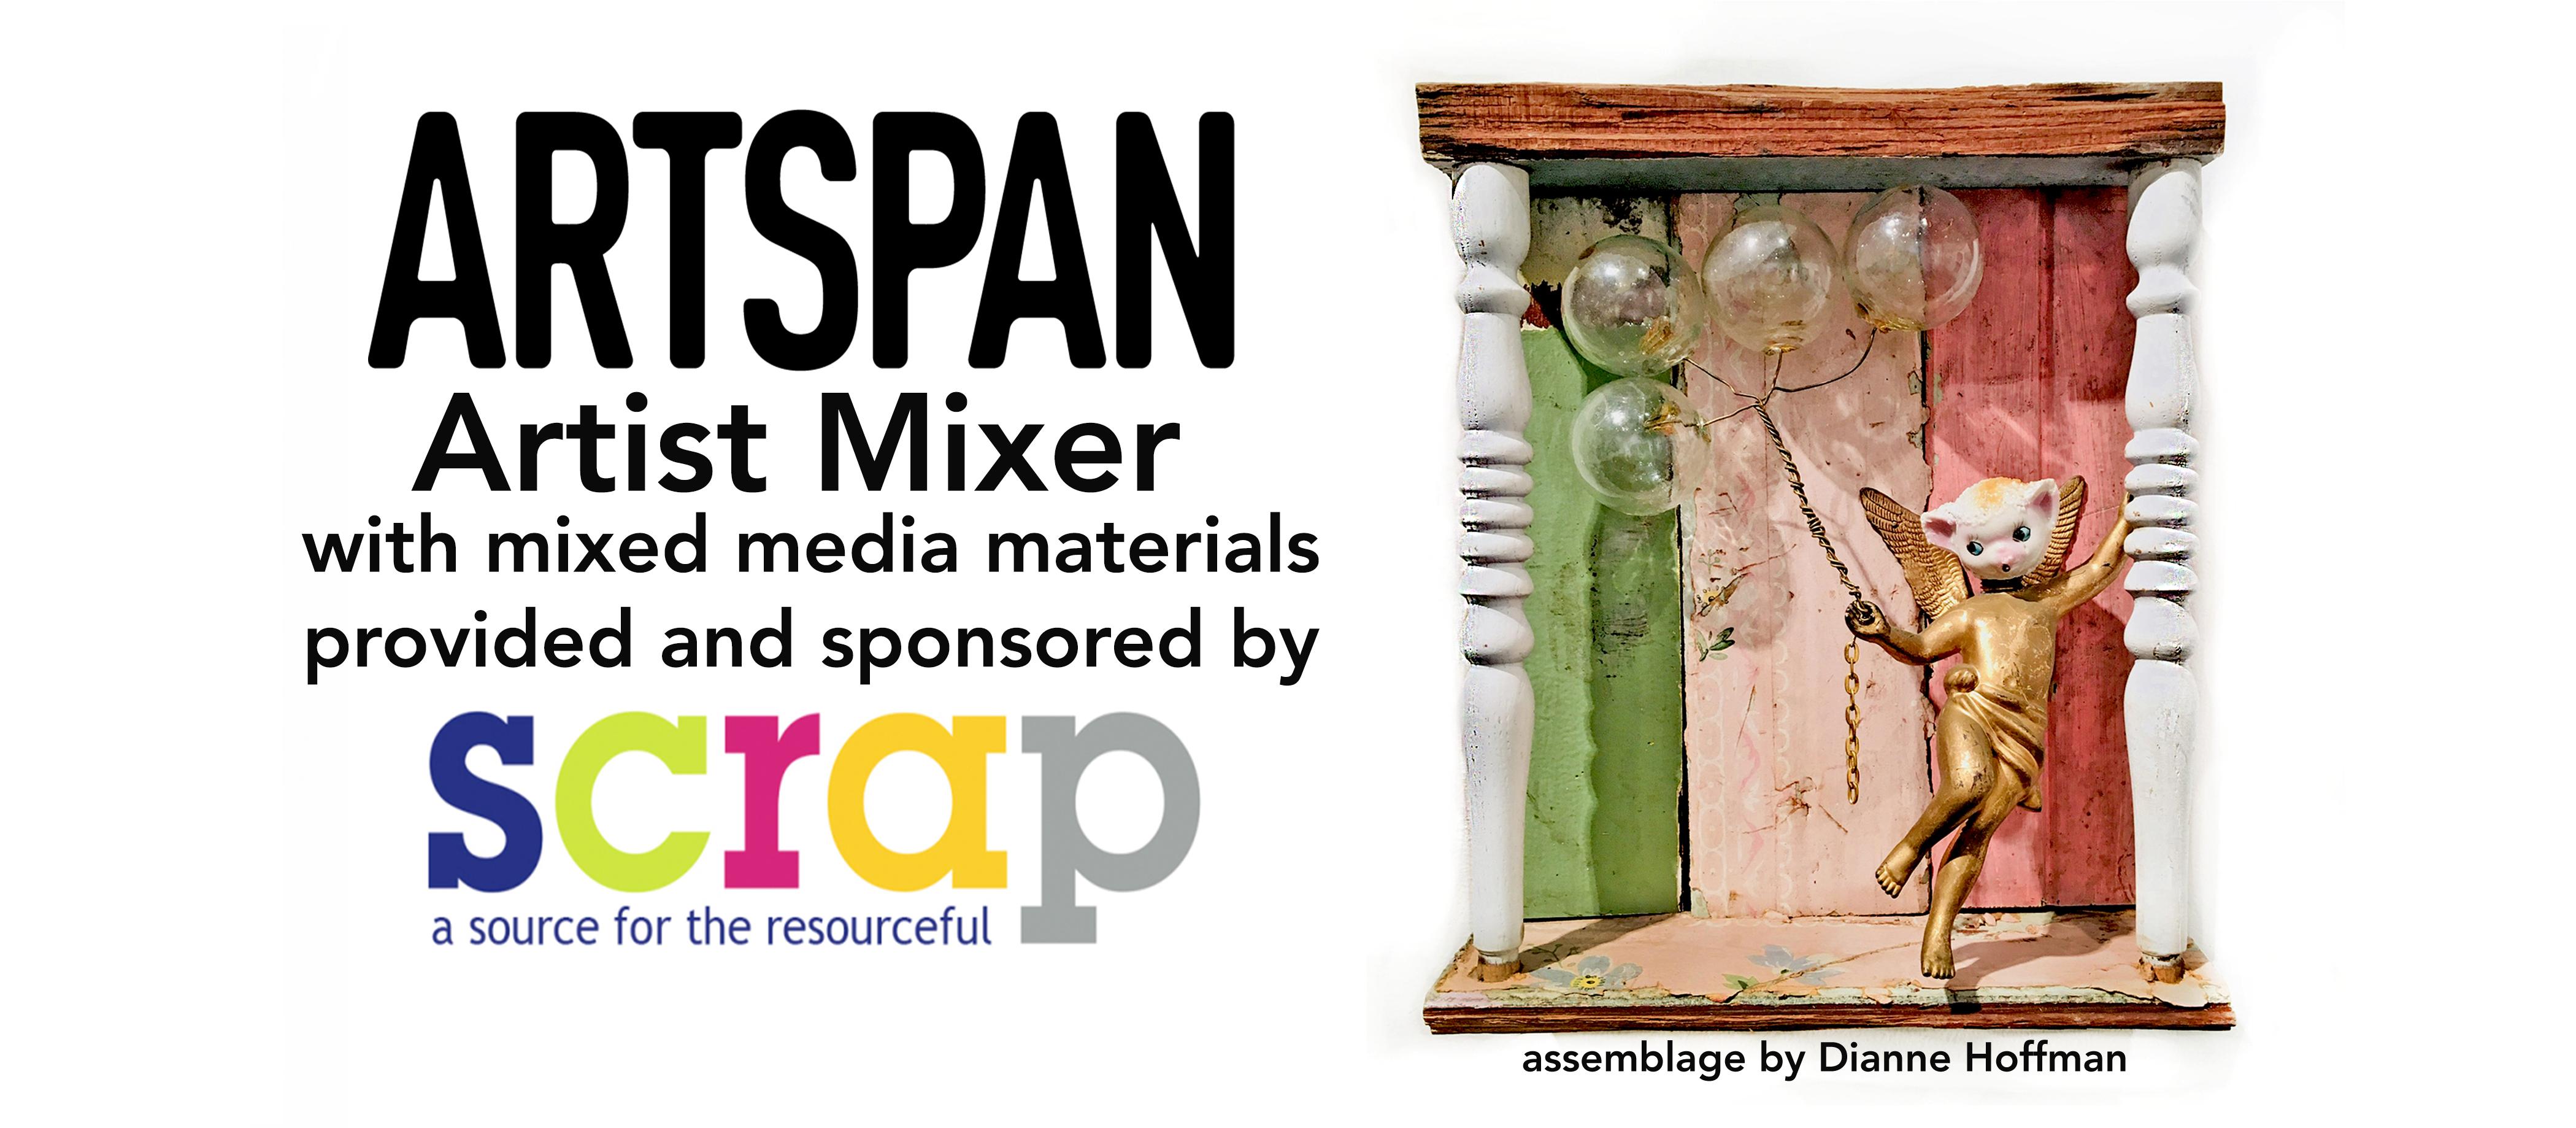 ArtSpan Artist Mixer with Mixed Media Materials from SCRAP SF